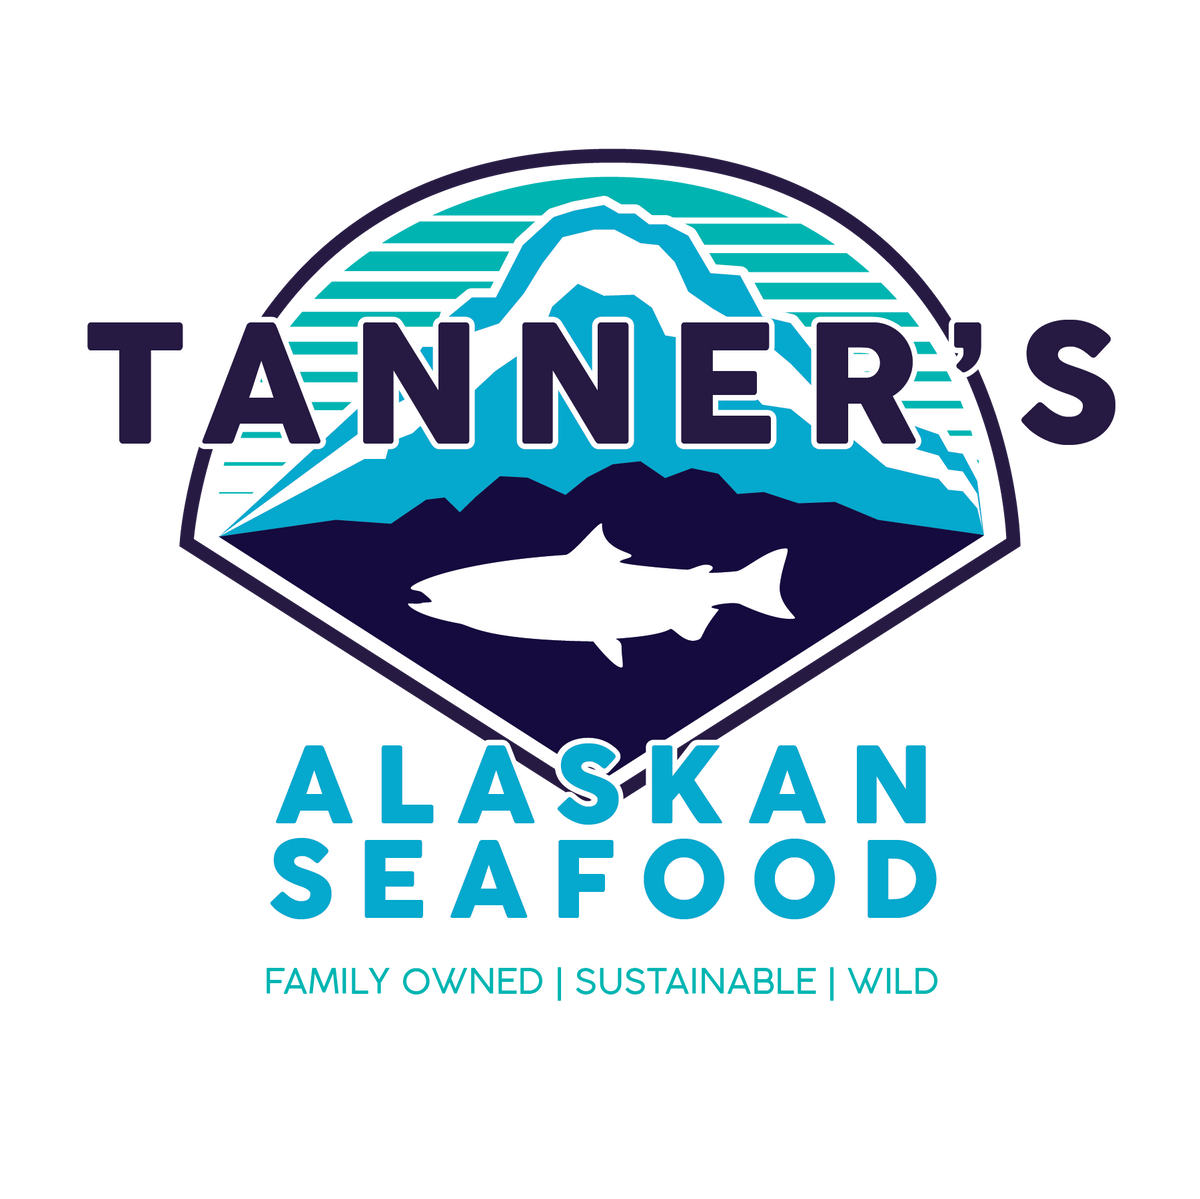 (c) Tannersfish.com